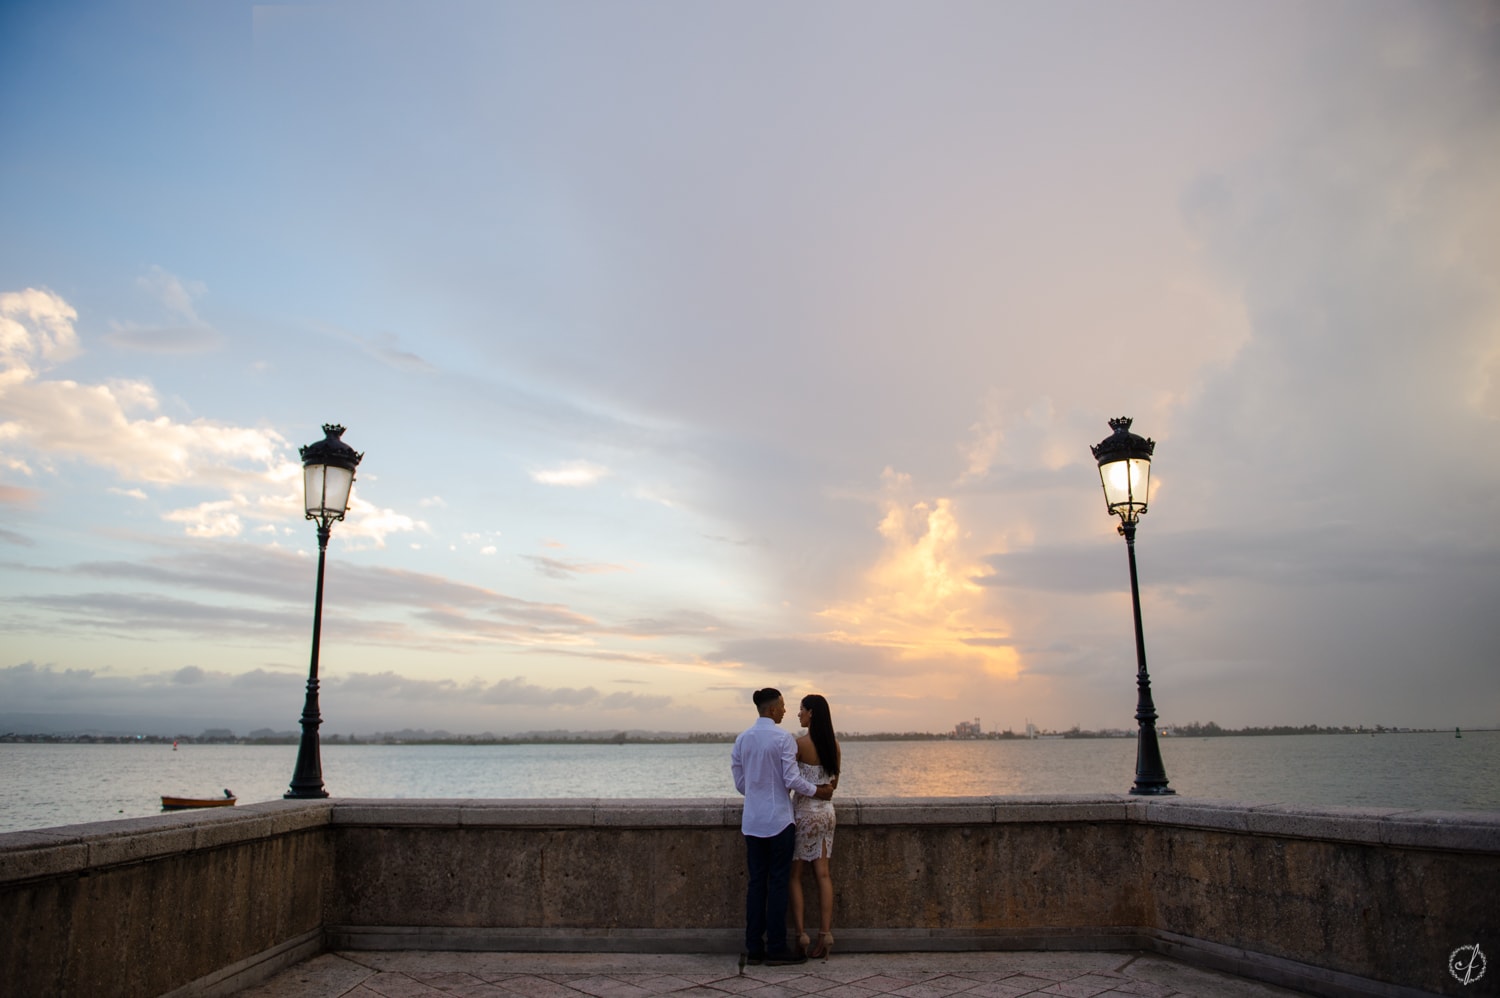 sesion de fotos love story en Viejo San Juan por fotografa profesional Camille Fontanez